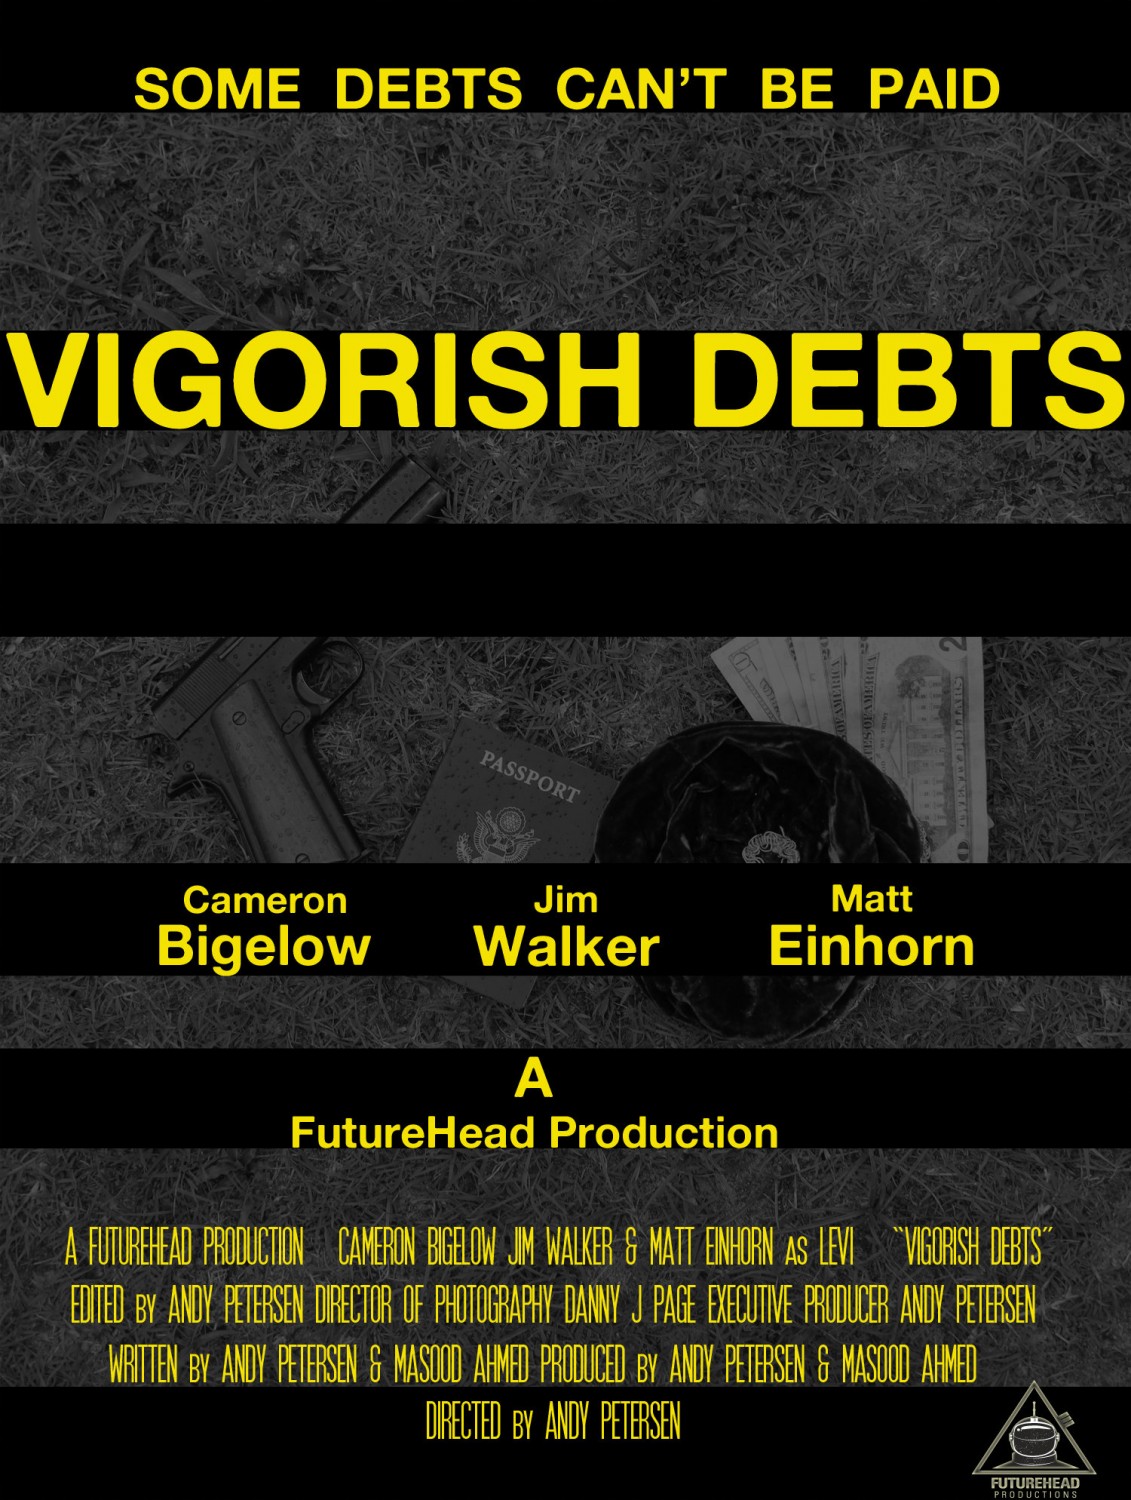 Extra Large Movie Poster Image for Vigorish Debts